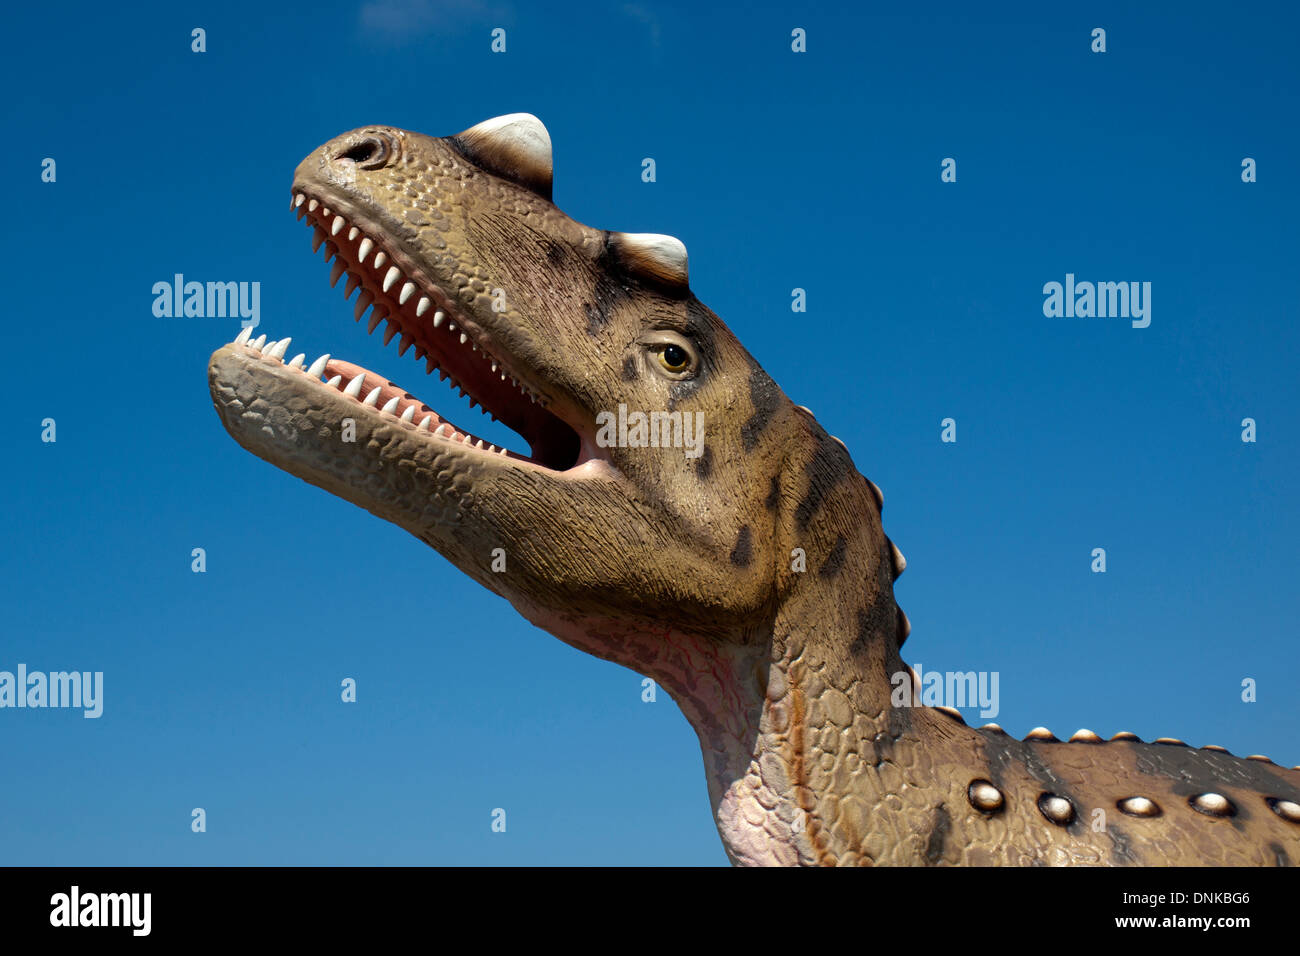 LEBA - 14 Juli: Porträt eines Dinosauriers, 14. Juli 2010 in Leba, Polen in die Park-Dinosaurier in Leba gemacht. Stockfoto